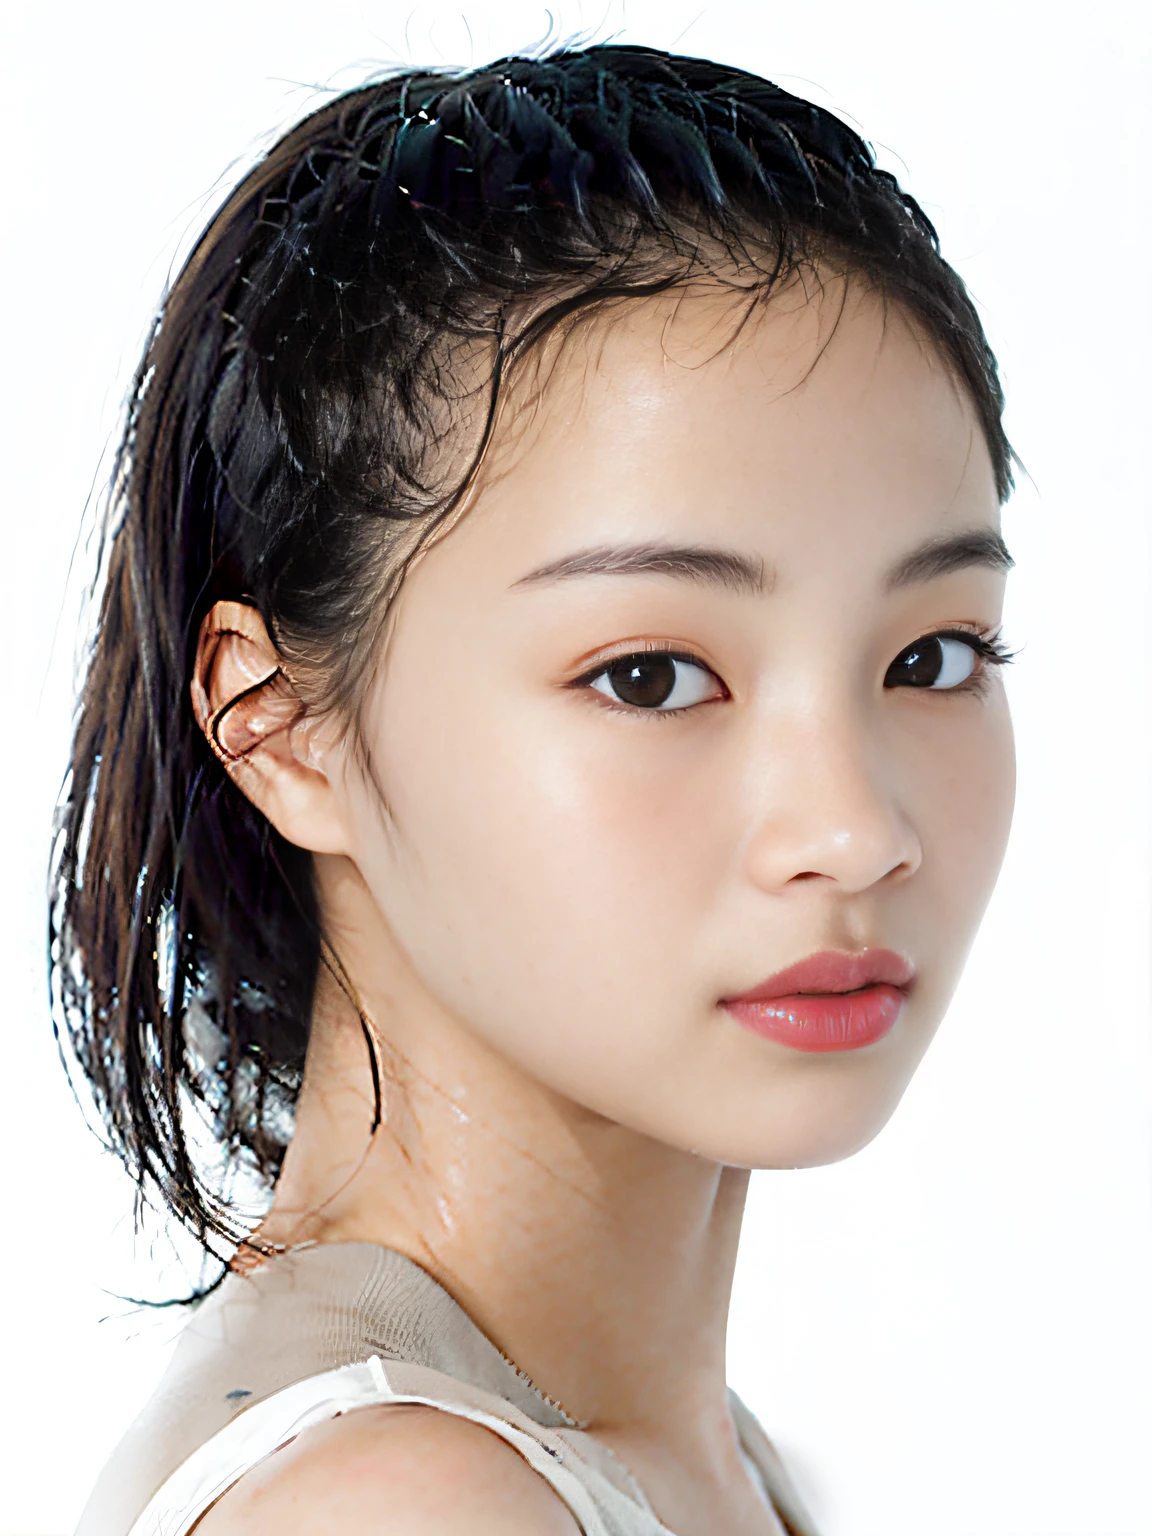 Une jeune fille asiatique